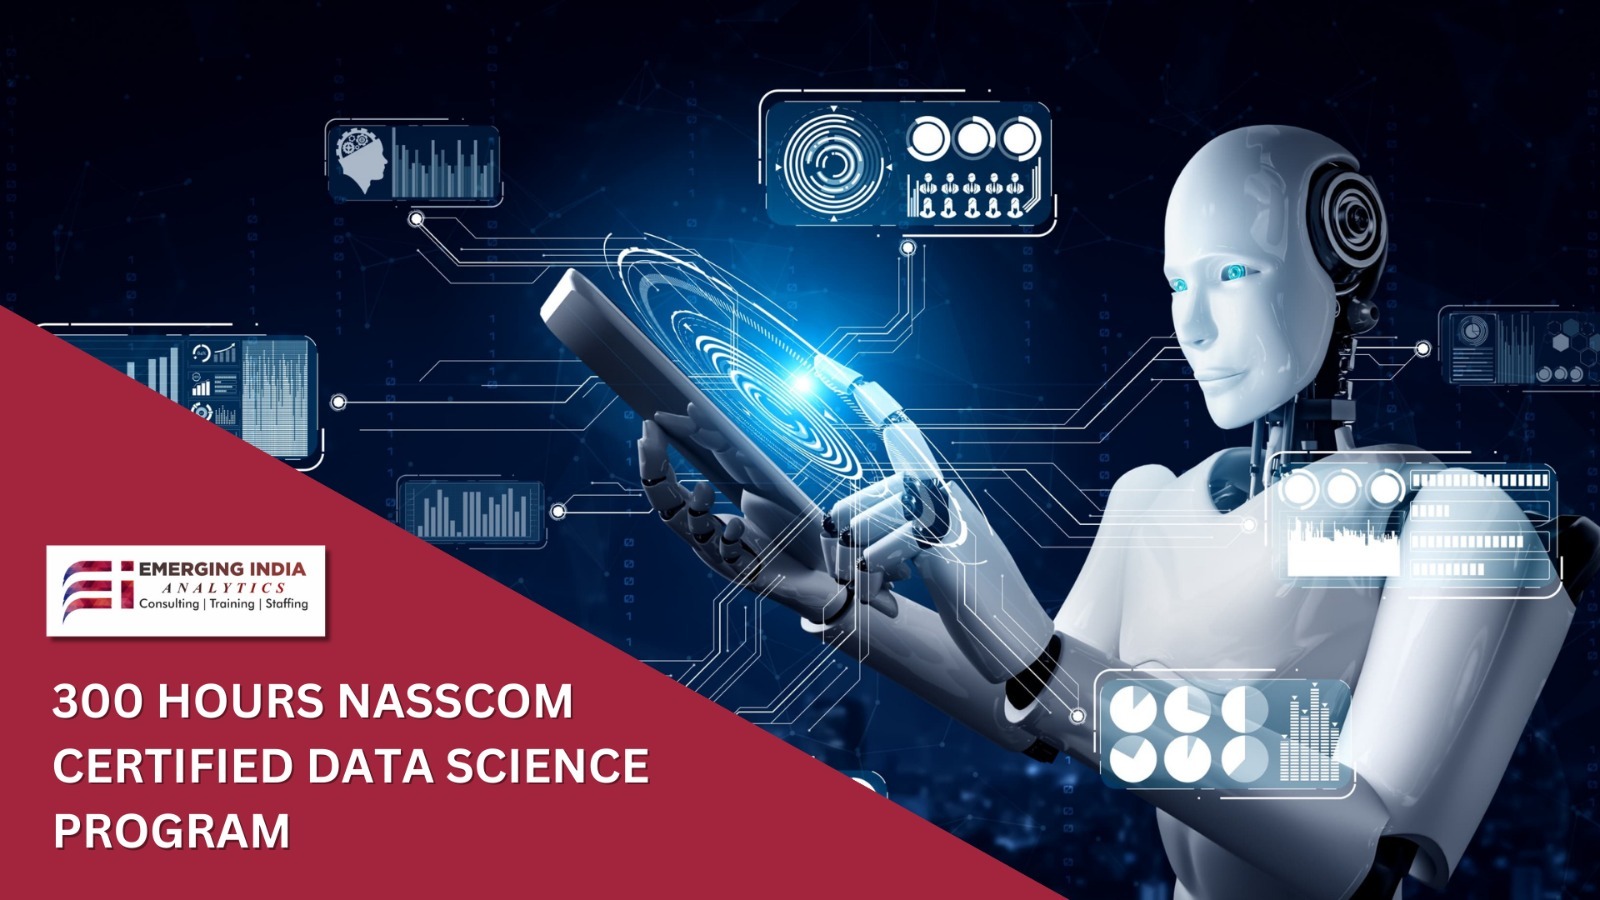 300 hours nasscom data science program certification